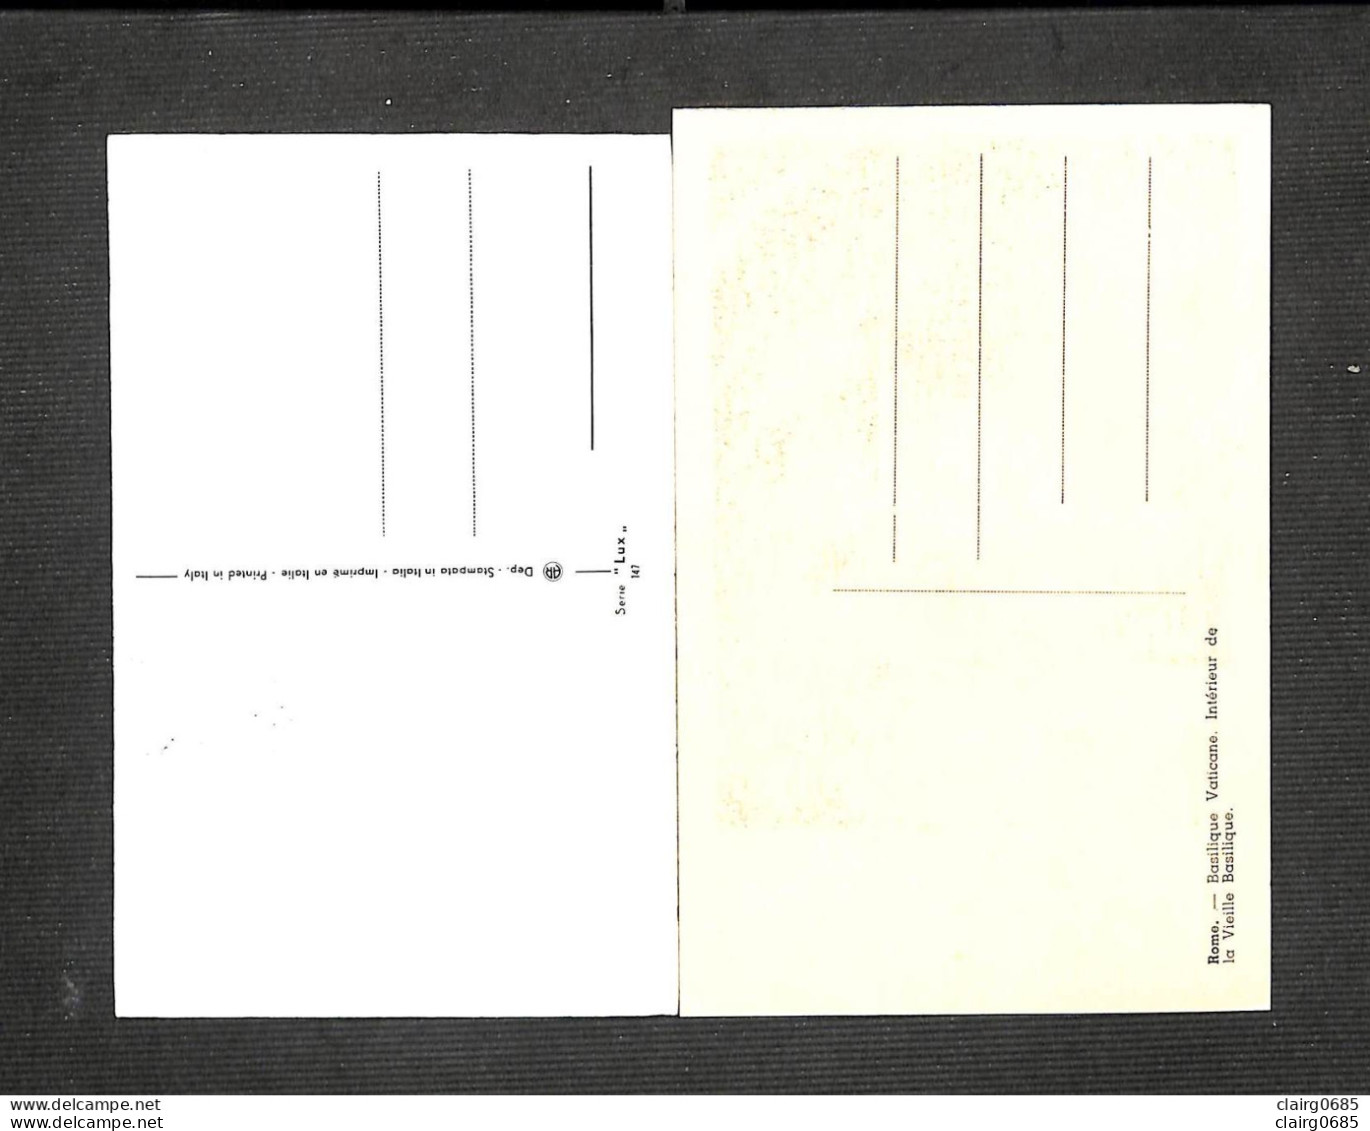 VATICAN - POSTE VATICANE - 2 Cartes MAXIMUM 1954 - S. PETRUS - Basilique Vaticane Intérieur - Cartes-Maximum (CM)